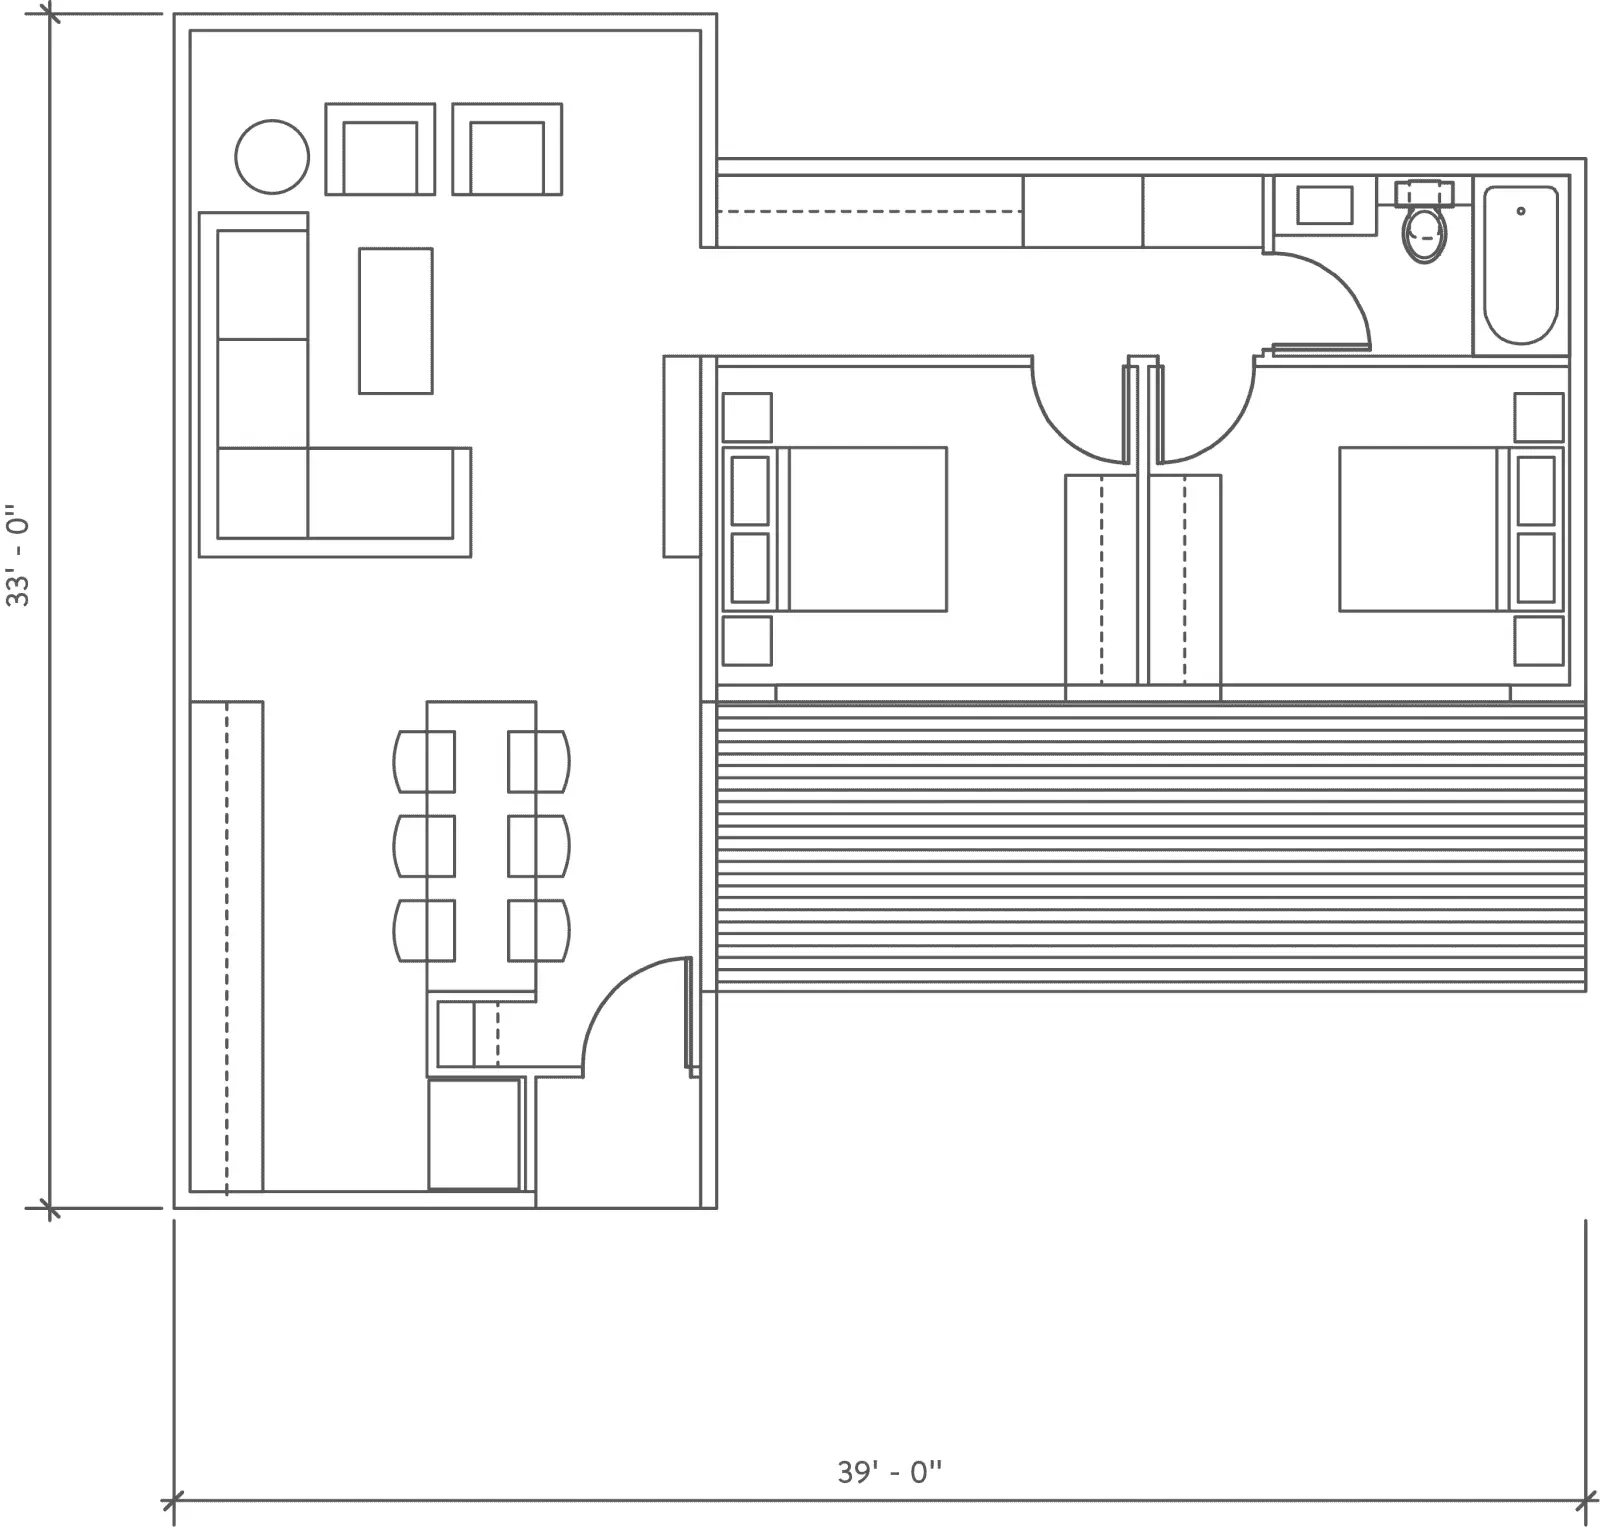 MA Modular Casita 850 modern prefab home model floor plan.